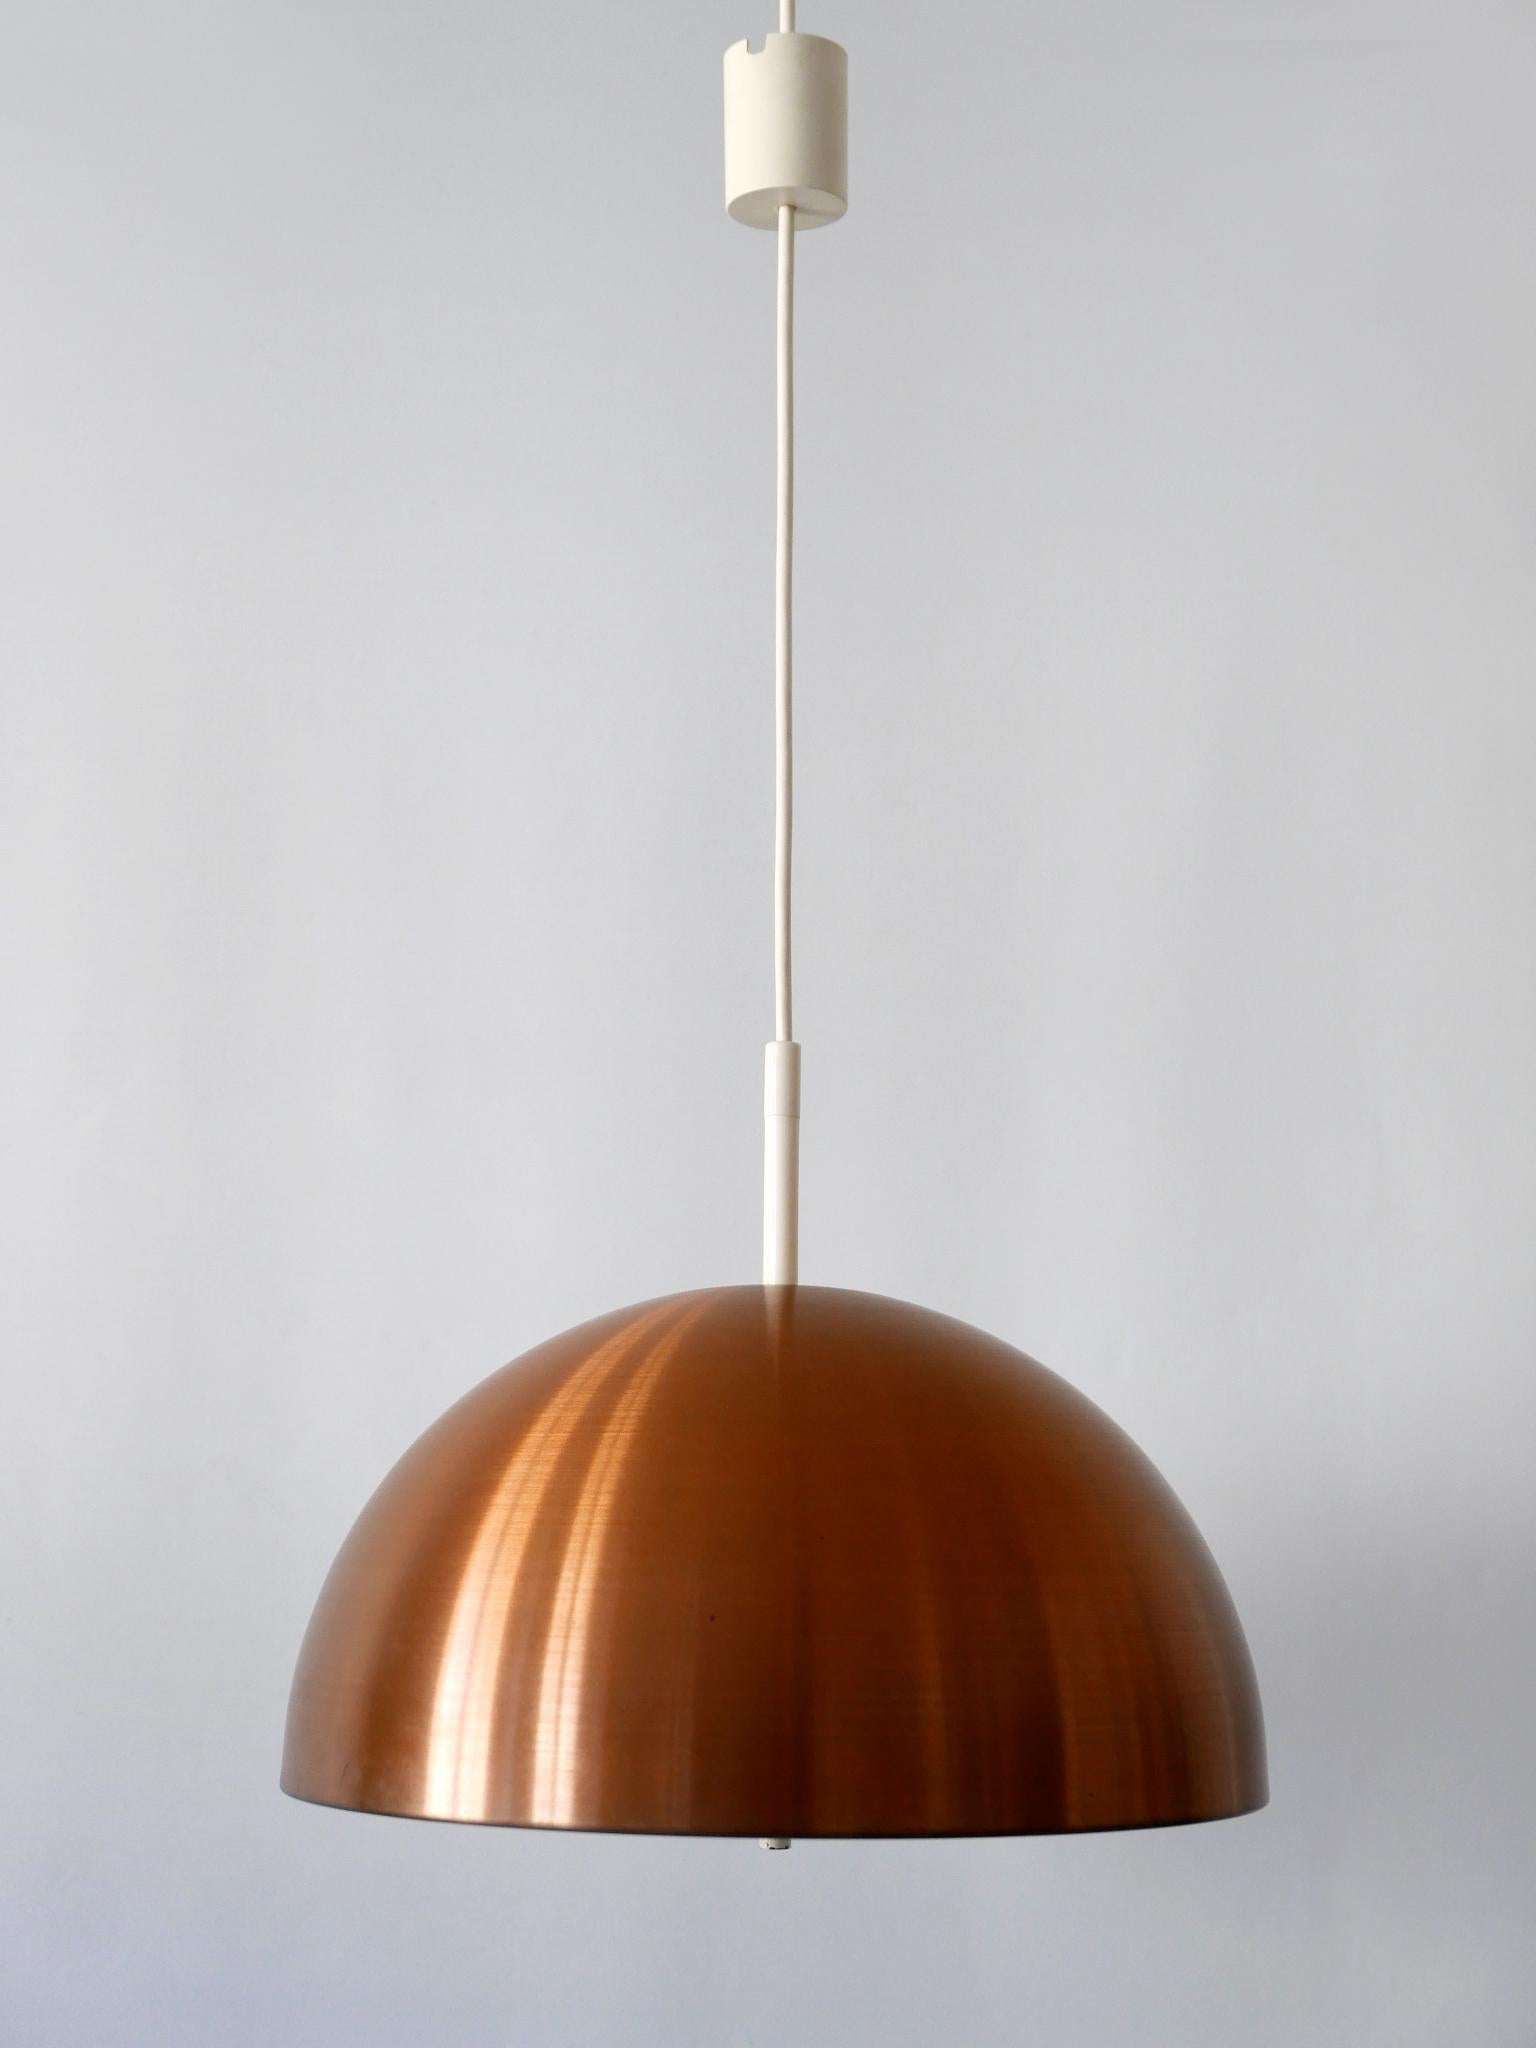 Elegant Mid-Century Modern Copper Pendant Lamp by Staff & Schwarz Germany, 1960s For Sale 2